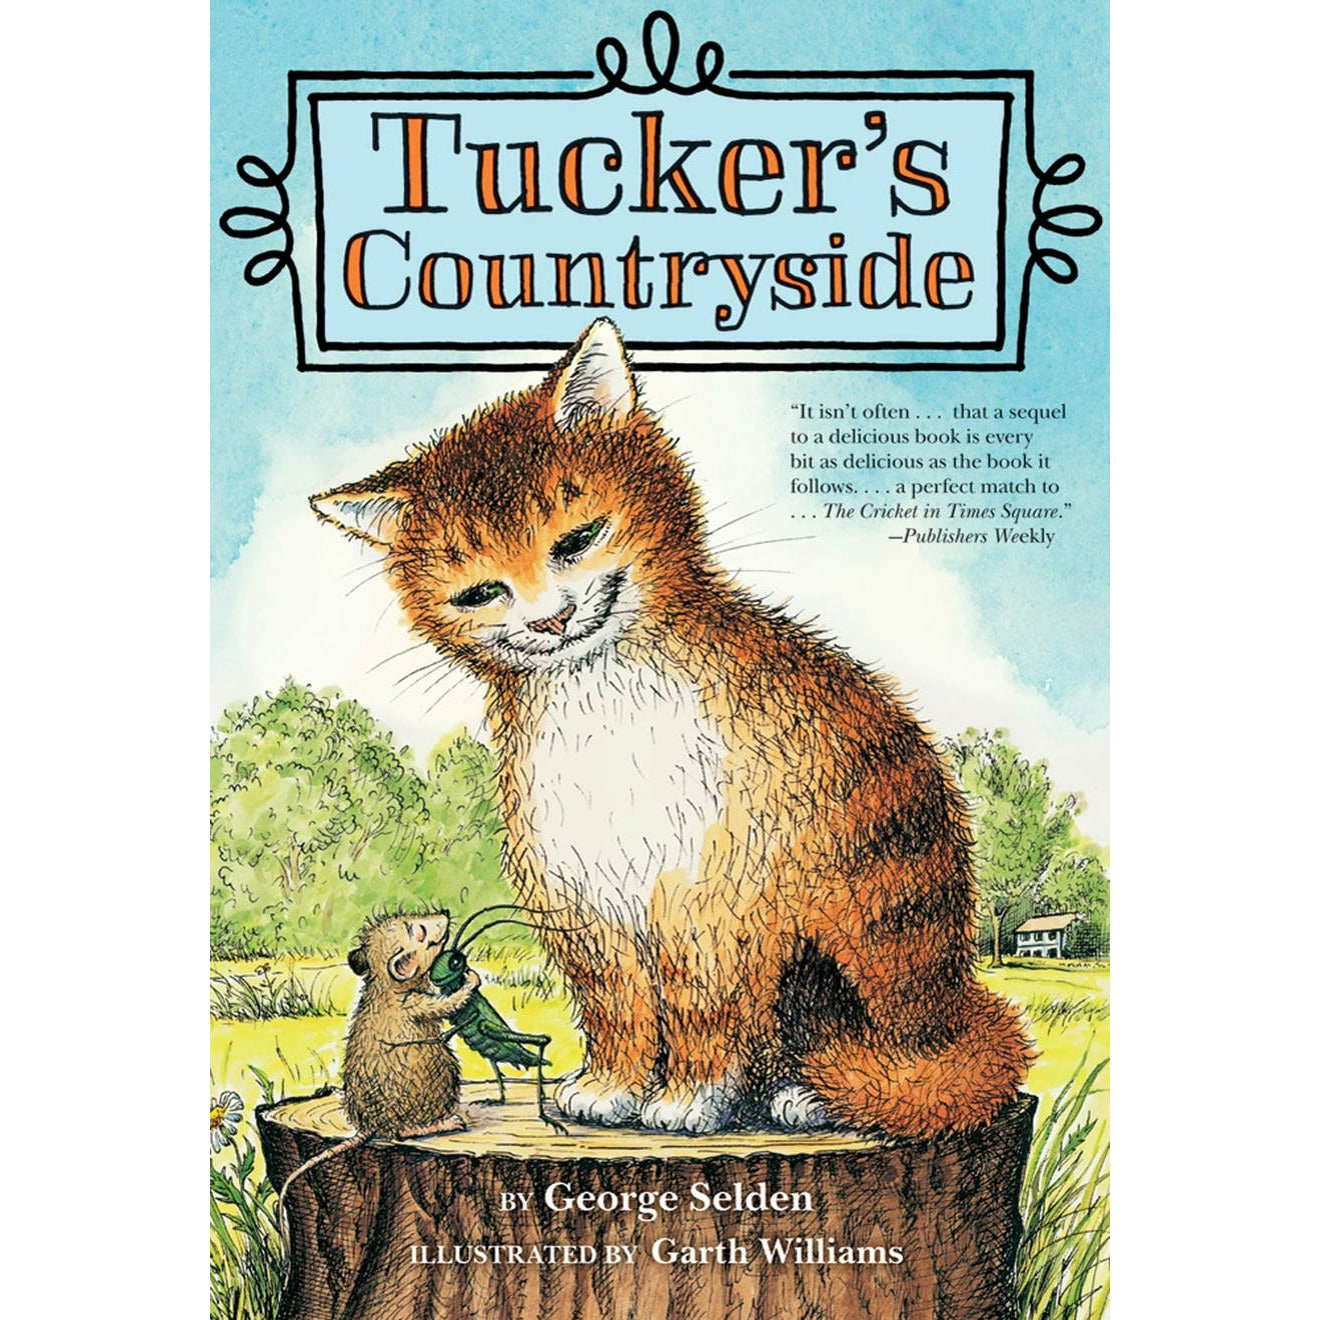 Tucker's Countryside